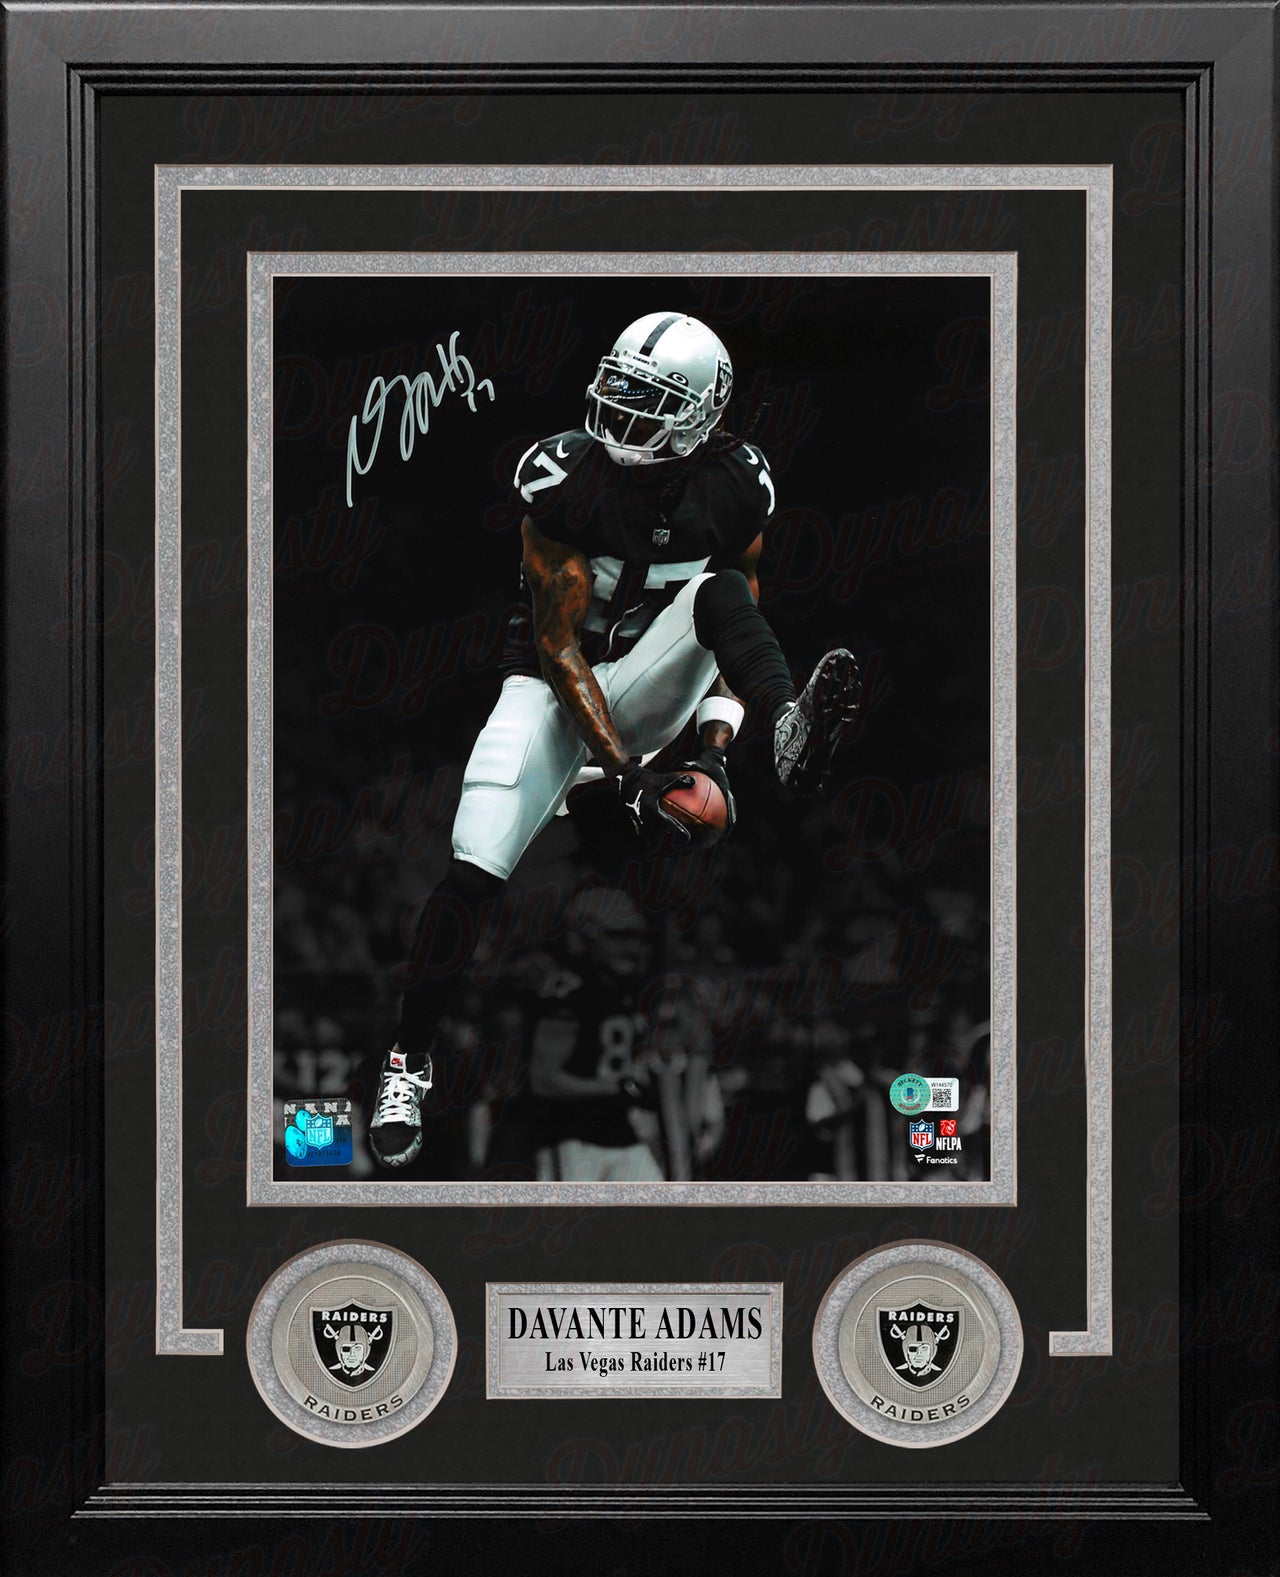 Davante Adams in Action Las Vegas Raiders Autographed Framed Football Photo - Dynasty Sports & Framing 